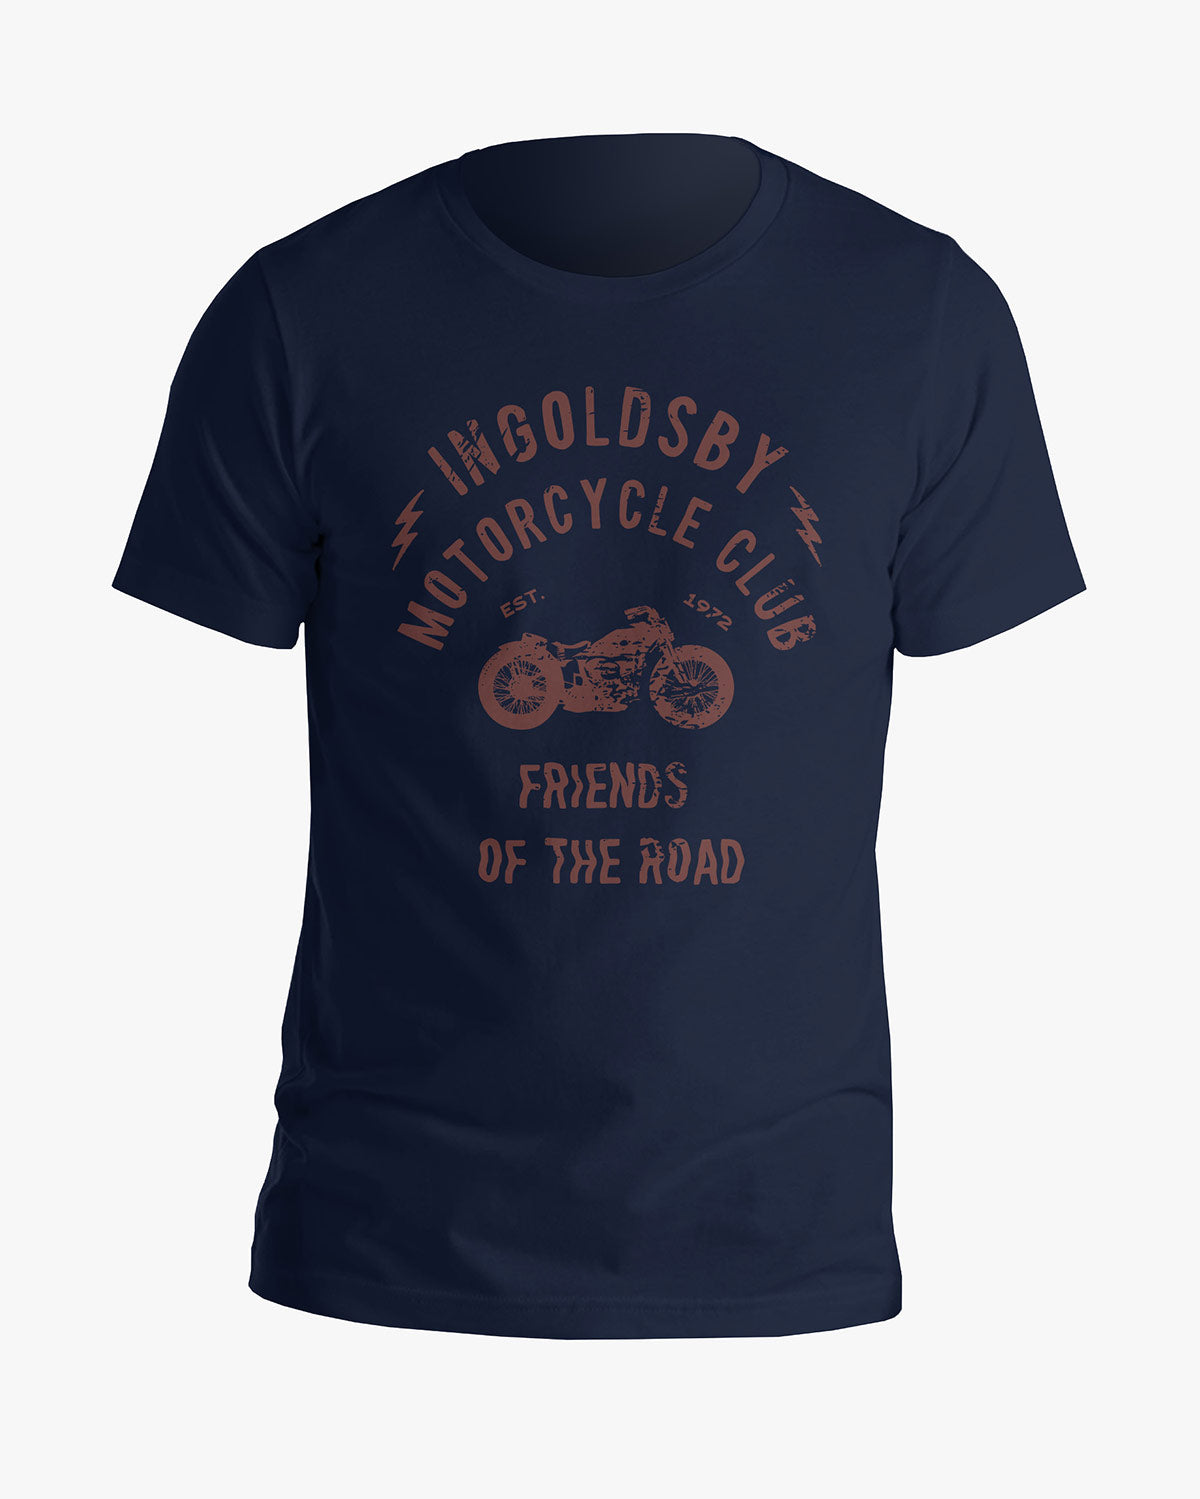 Motorcycle Club - Ingoldsby - Tee